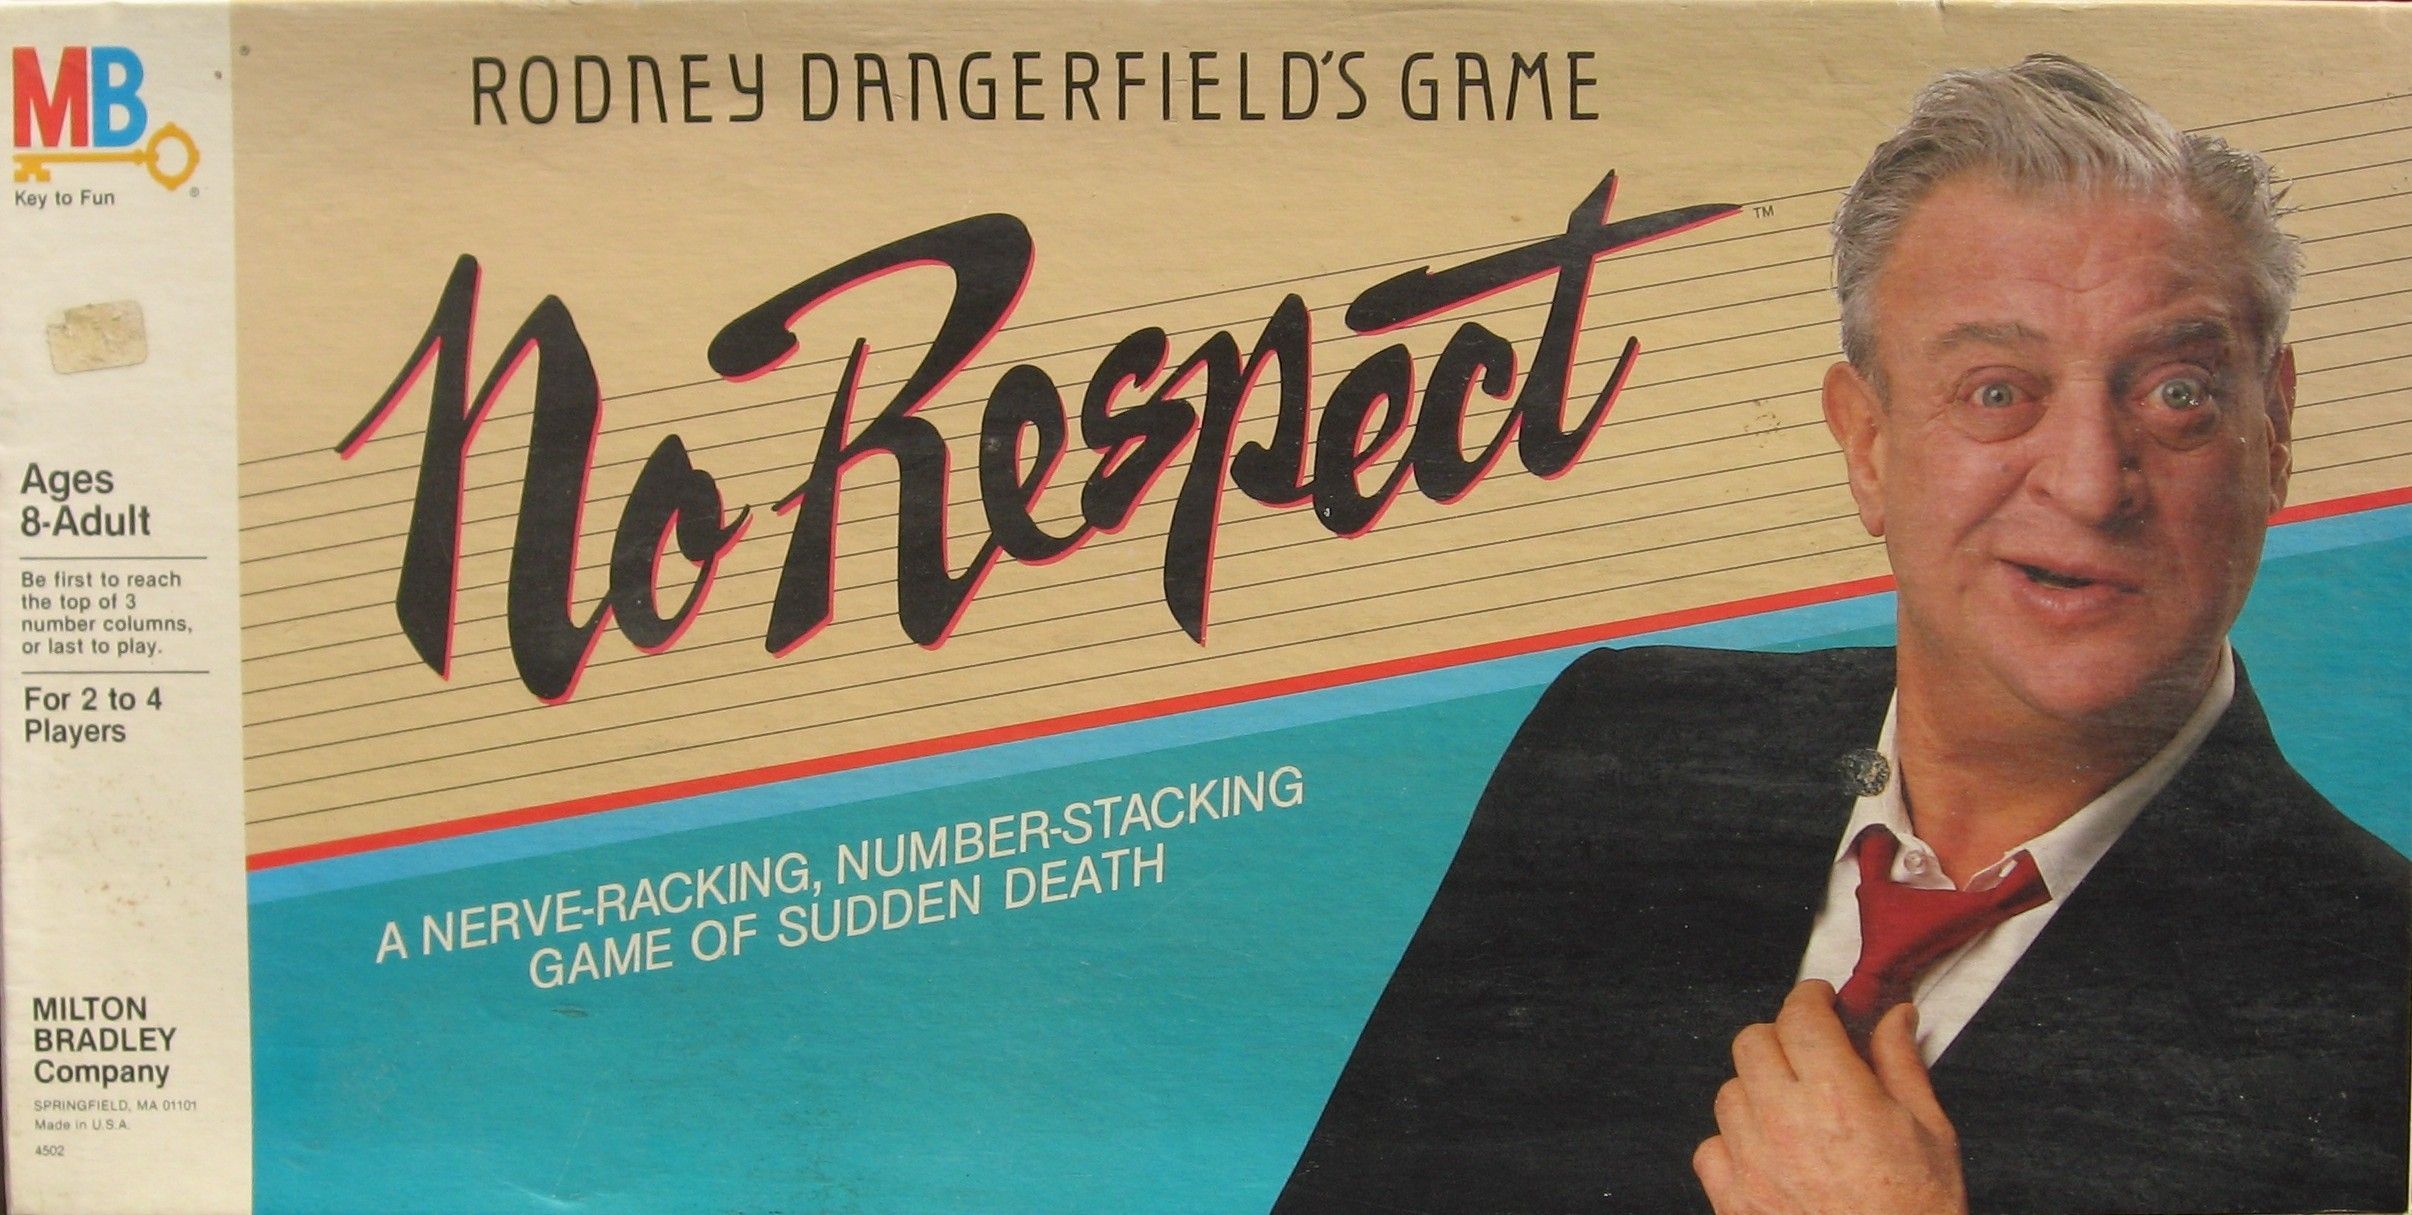 No Respect: Rodney Dangerfield's Game